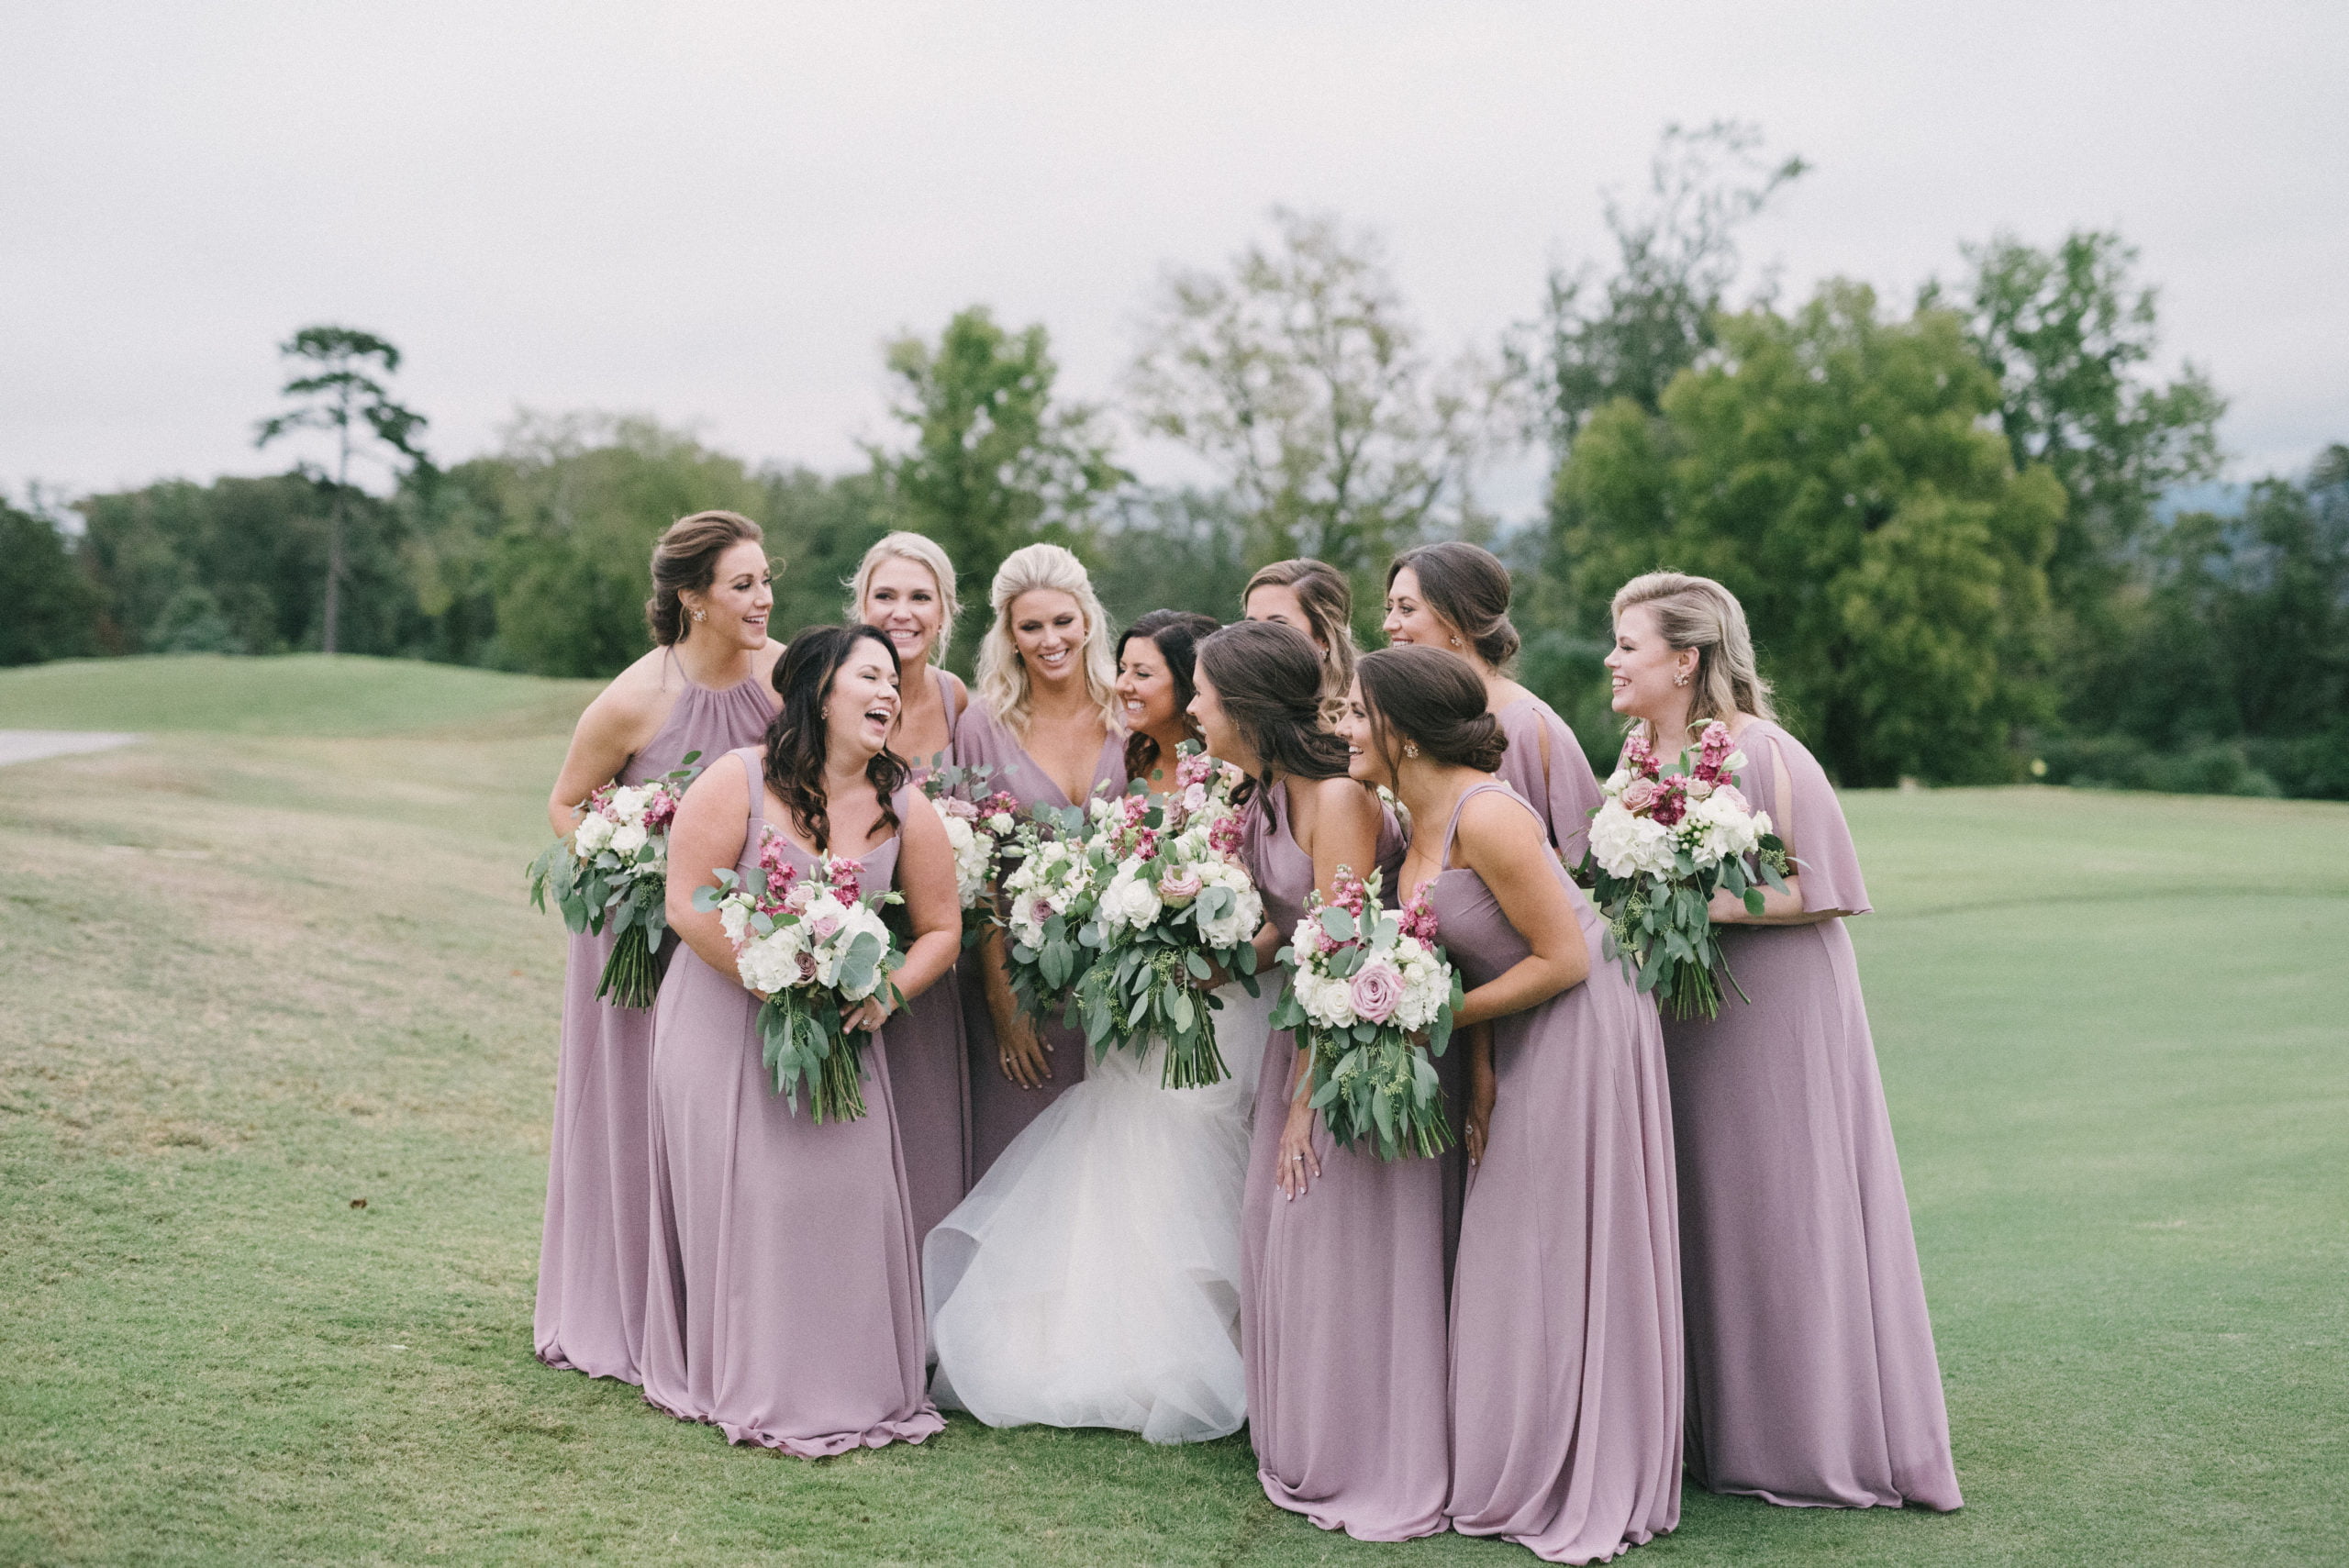 Vestavia Hills AL bride and bridesmaids posing with bouquets by Olivia Joy Photography